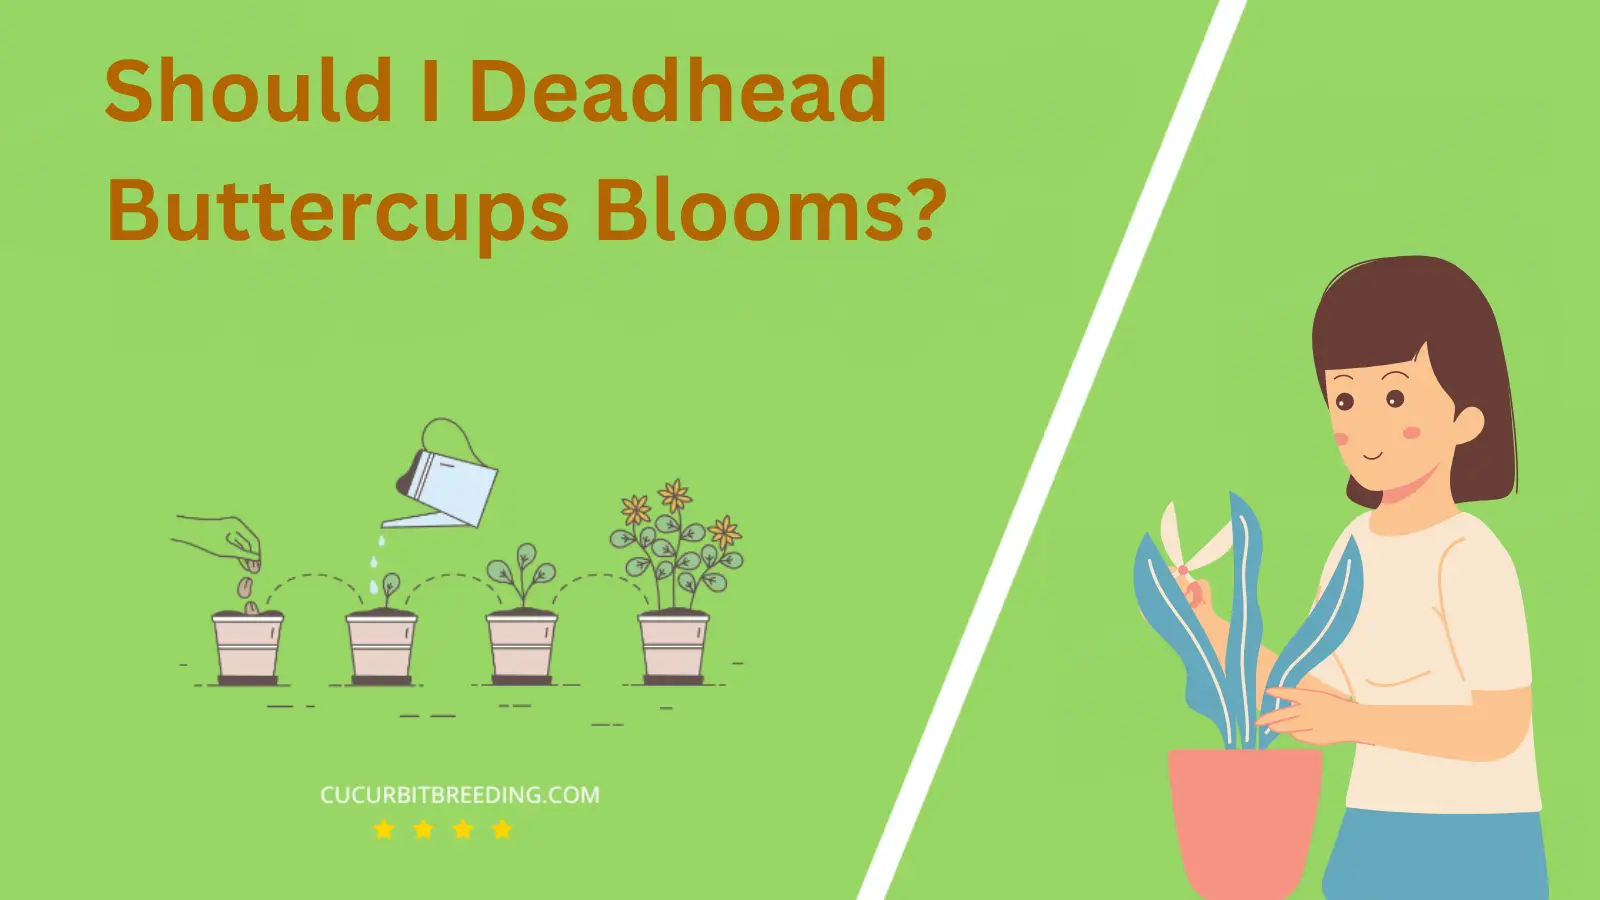 Should I Deadhead Buttercups Blooms?